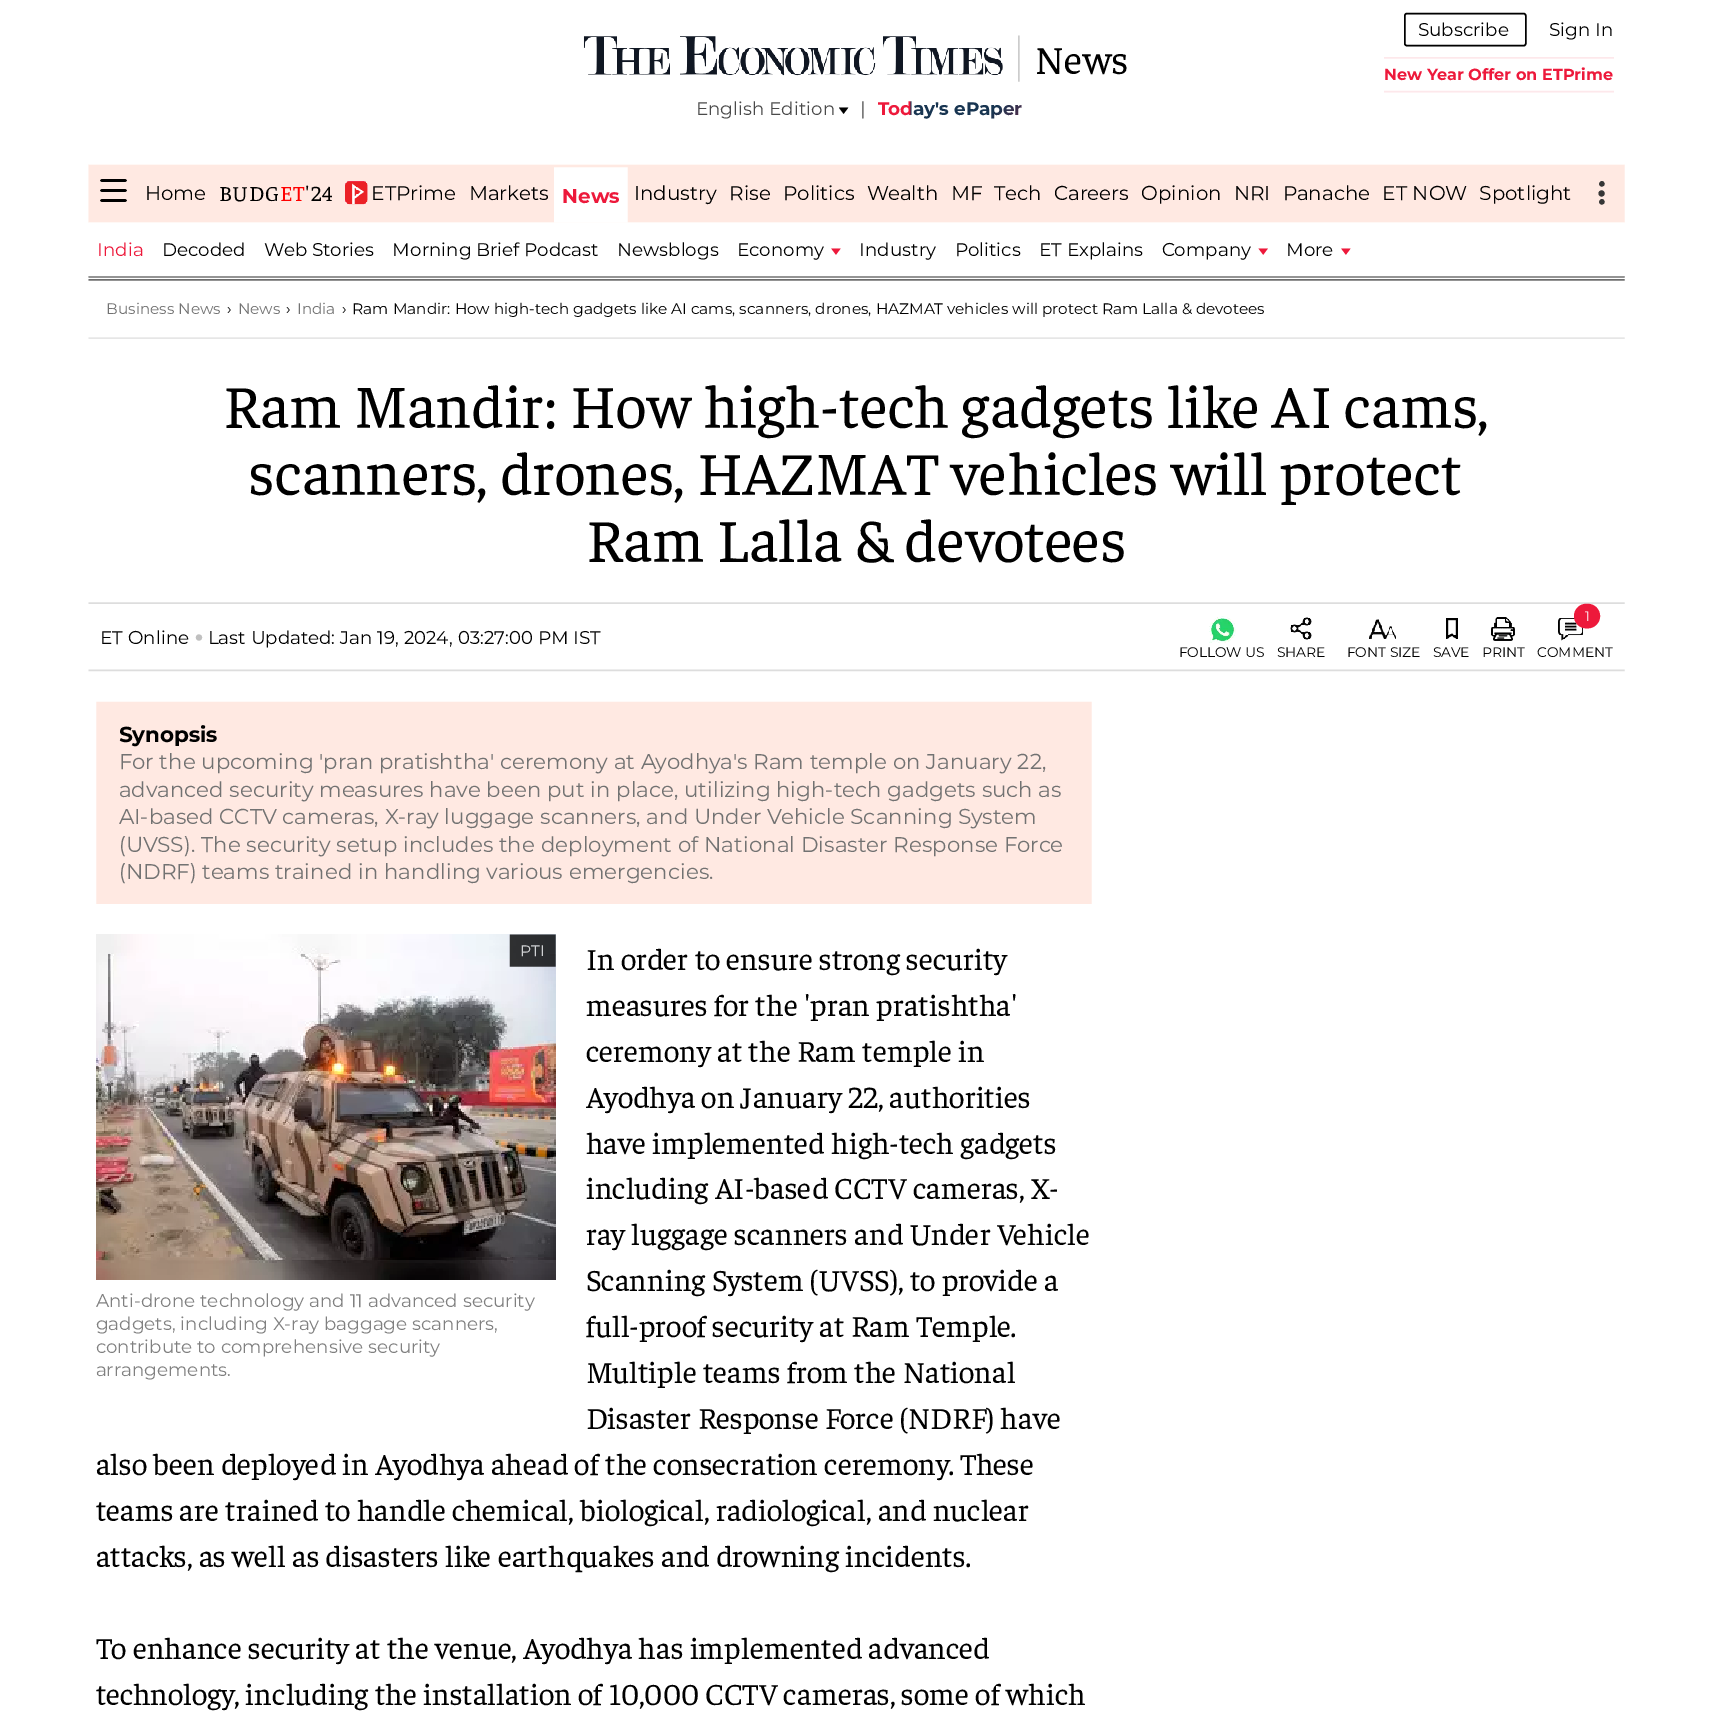 Ram Mandir: How high-tech gadgets like AI cams, scanners, drones, HAZMAT vehicles will protect Ram Lalla & devotees